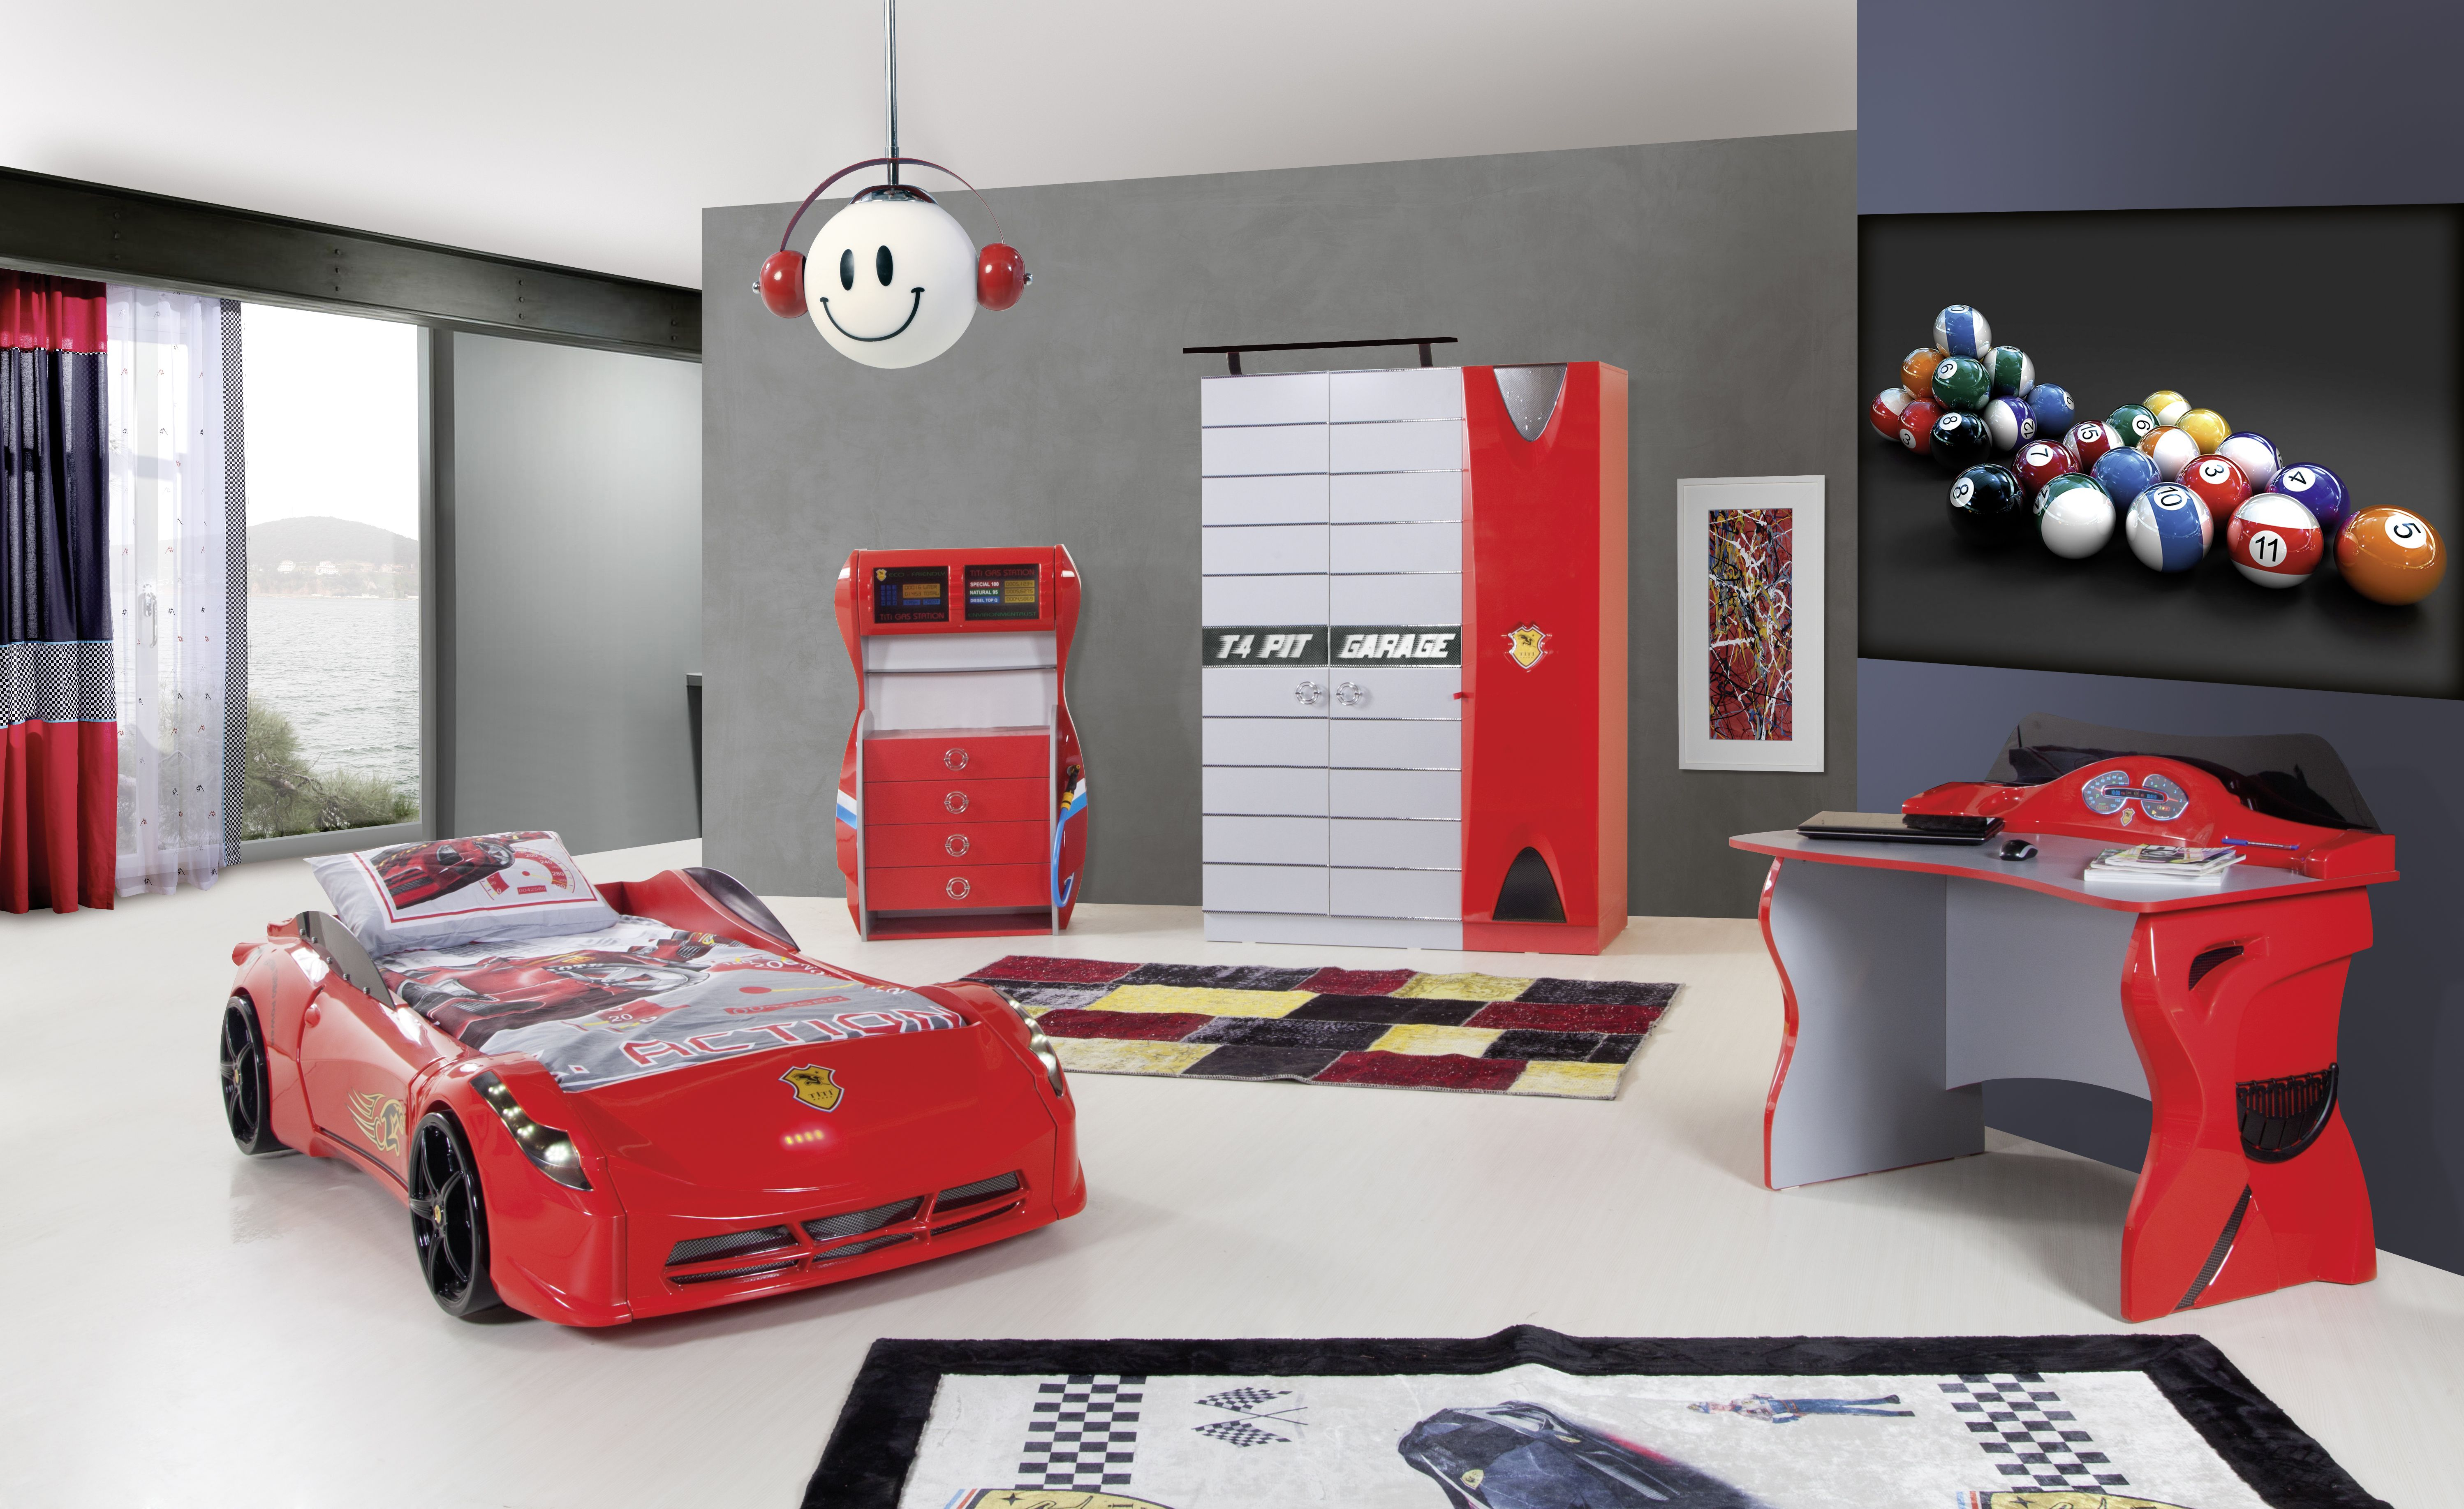 Ferrari Racer Red Bedroom Set Titi 3 Piece Bedroom Set Car pertaining to measurements 5993 X 3670